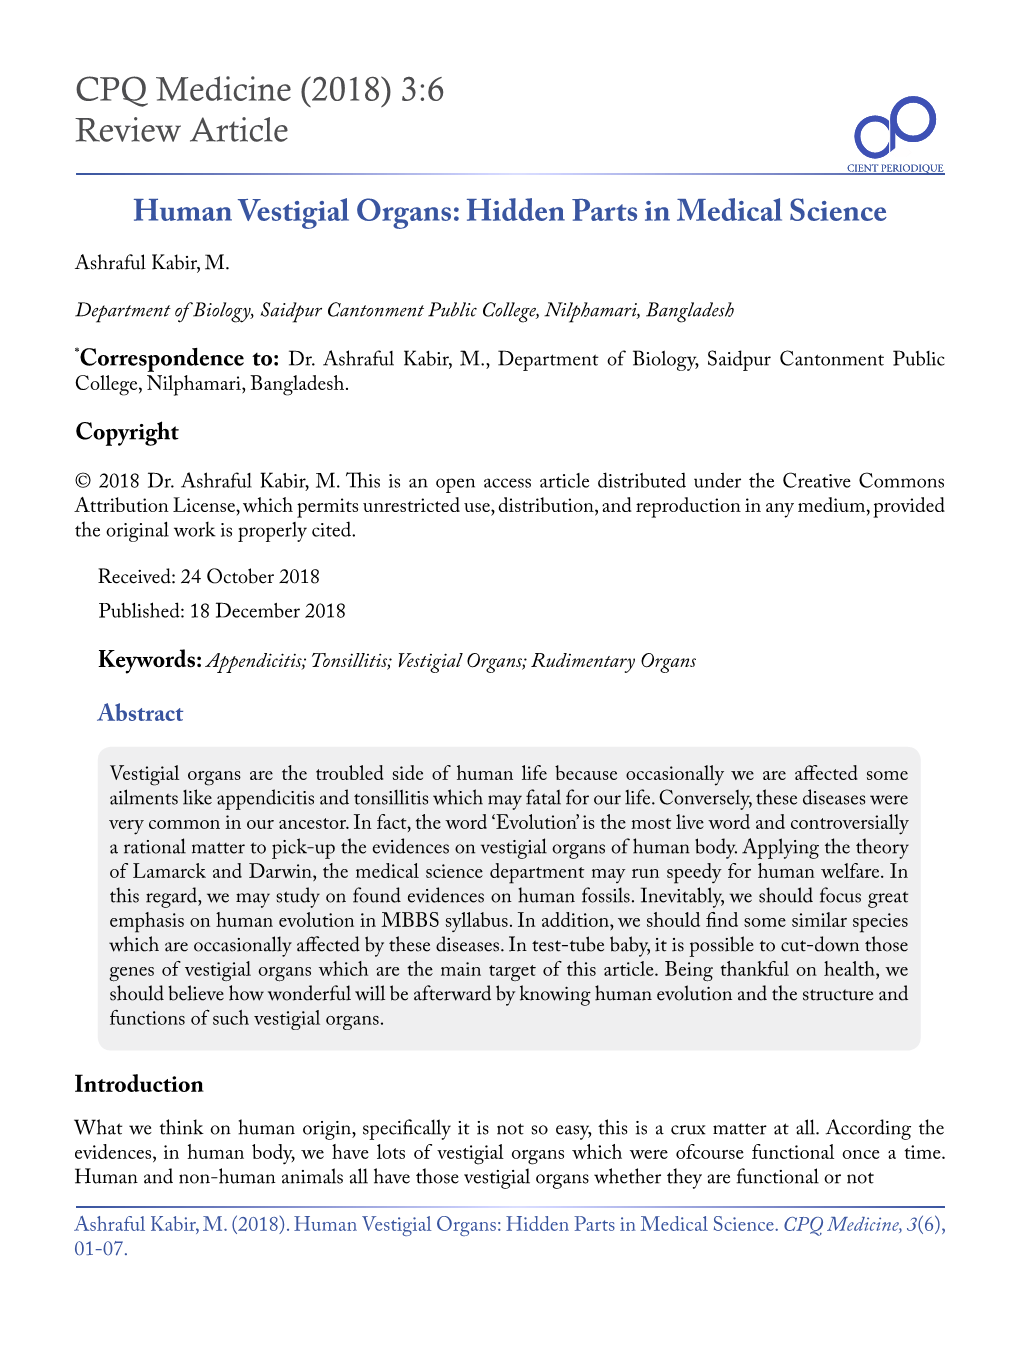 Human Vestigial Organs: Hidden Parts in Medical Science